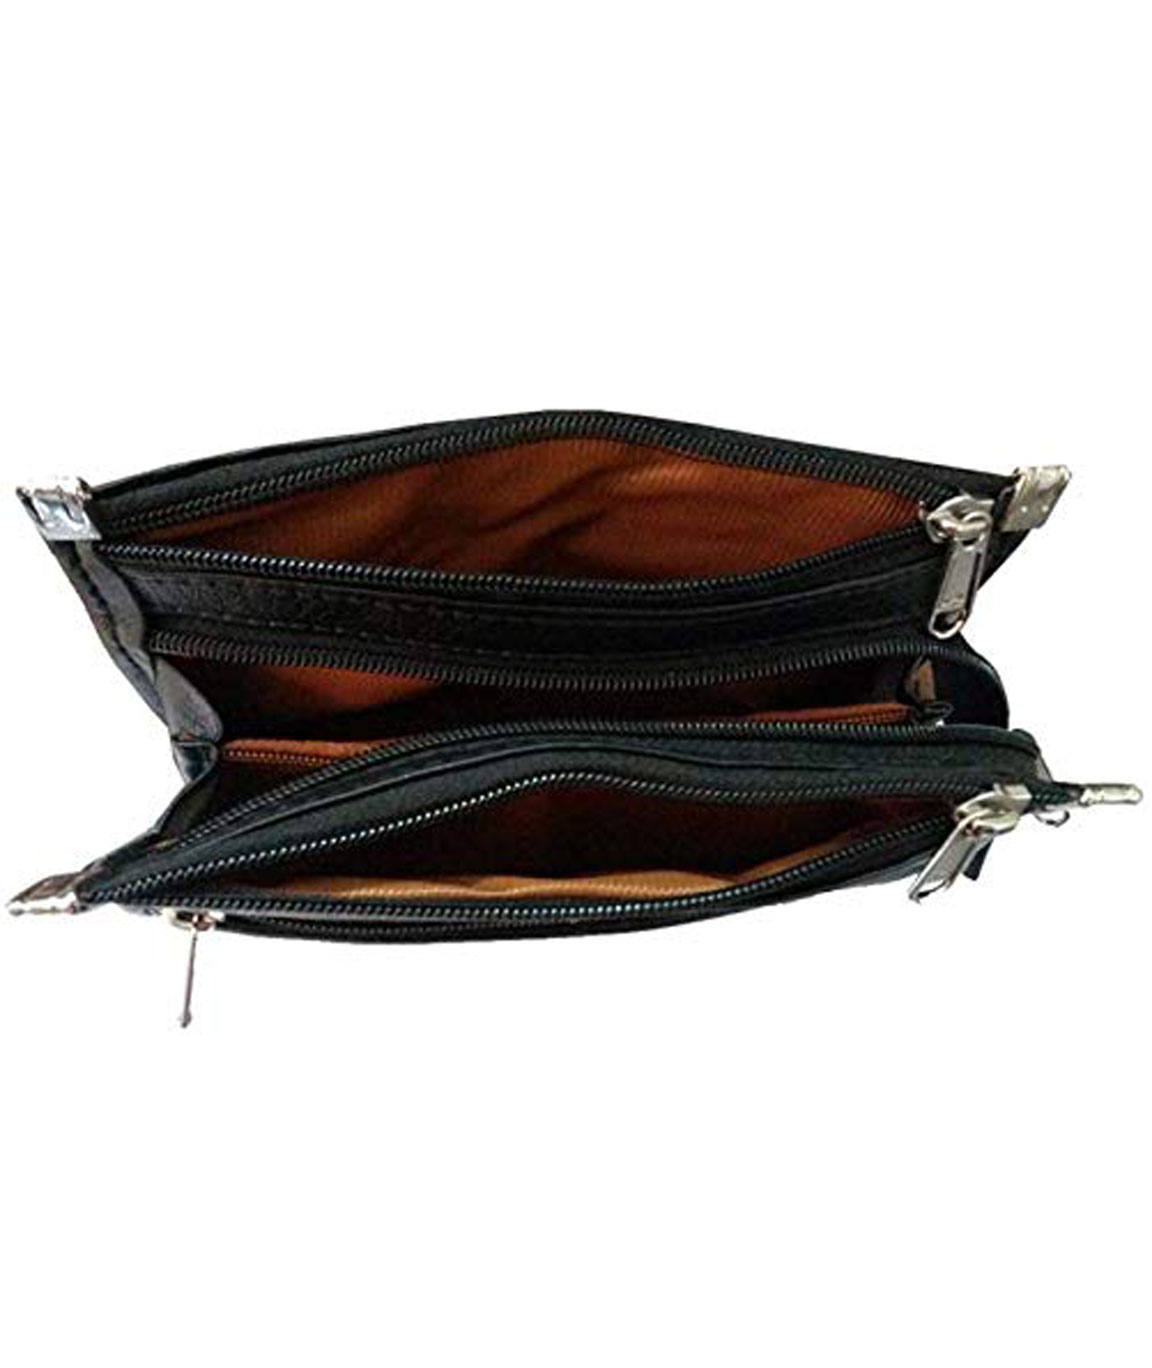 Womens Genuine Leather Tote Bag, Designer Handbag, Shoulder Bag, Crossbody  Bag, Black Tote, Tan Purse From Dongtrade, $61.72 | DHgate.Com